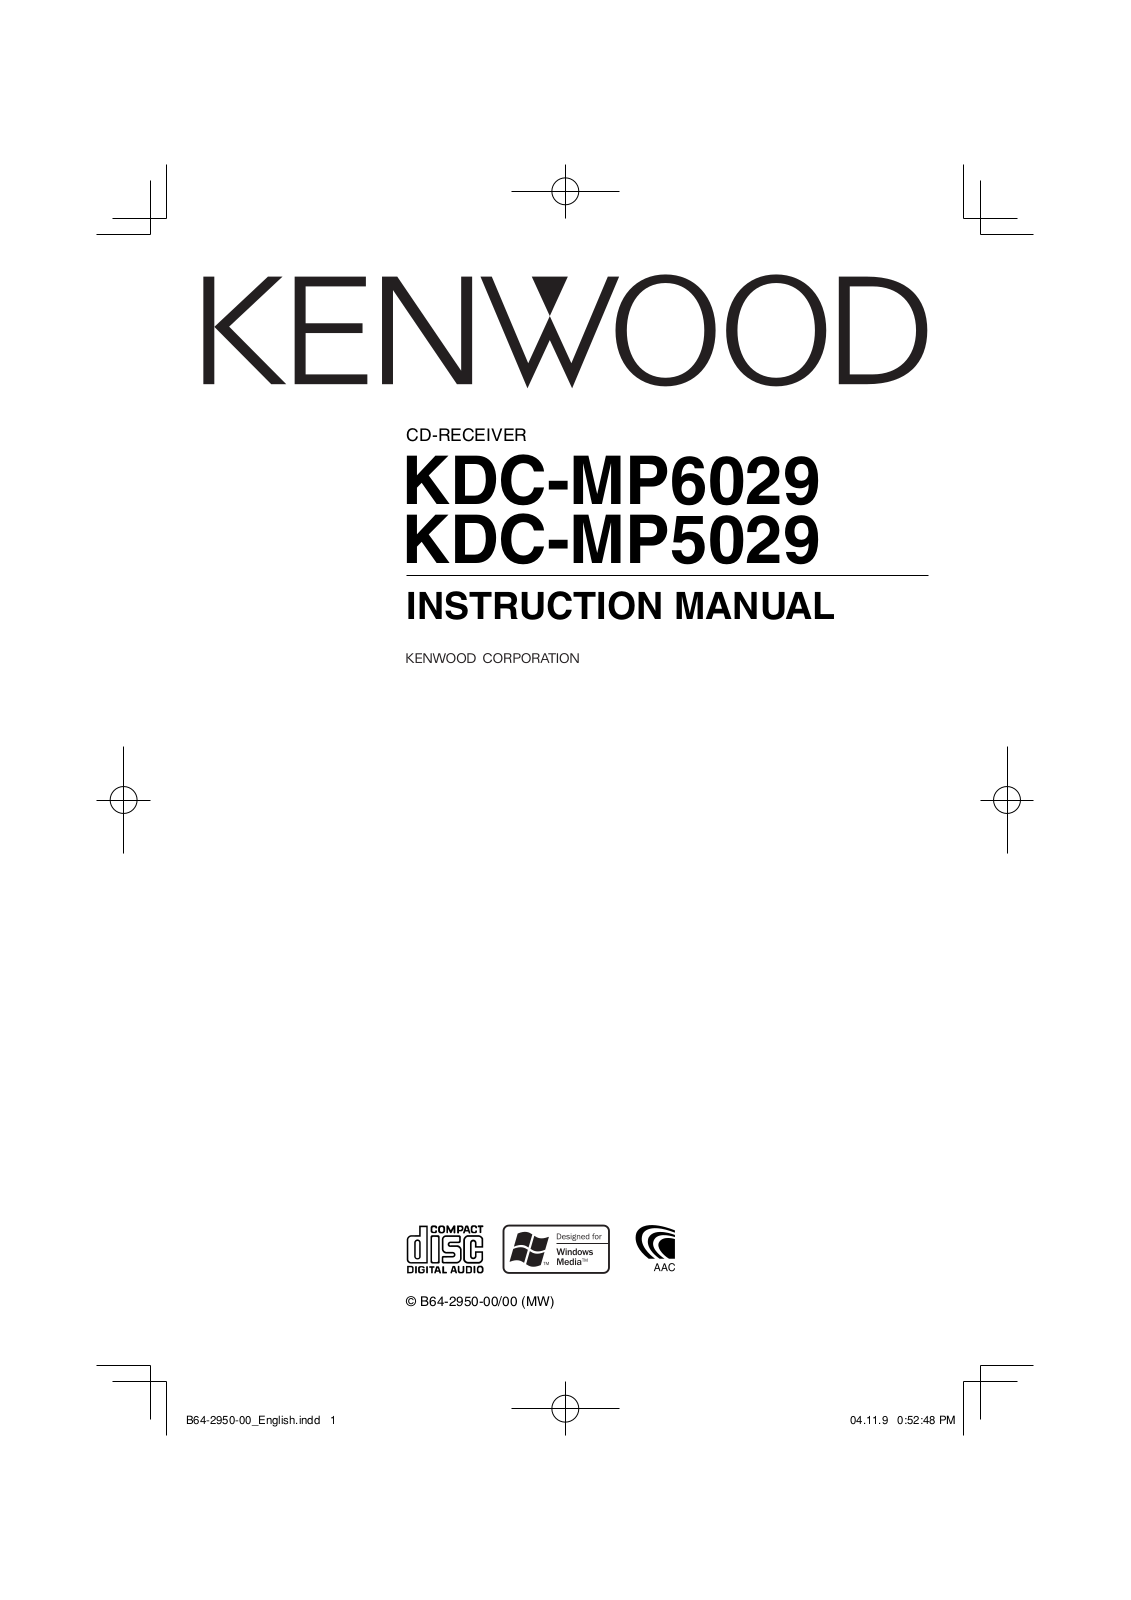 Kenwood KDC-MP5029, KDC-MP6029 User Manual